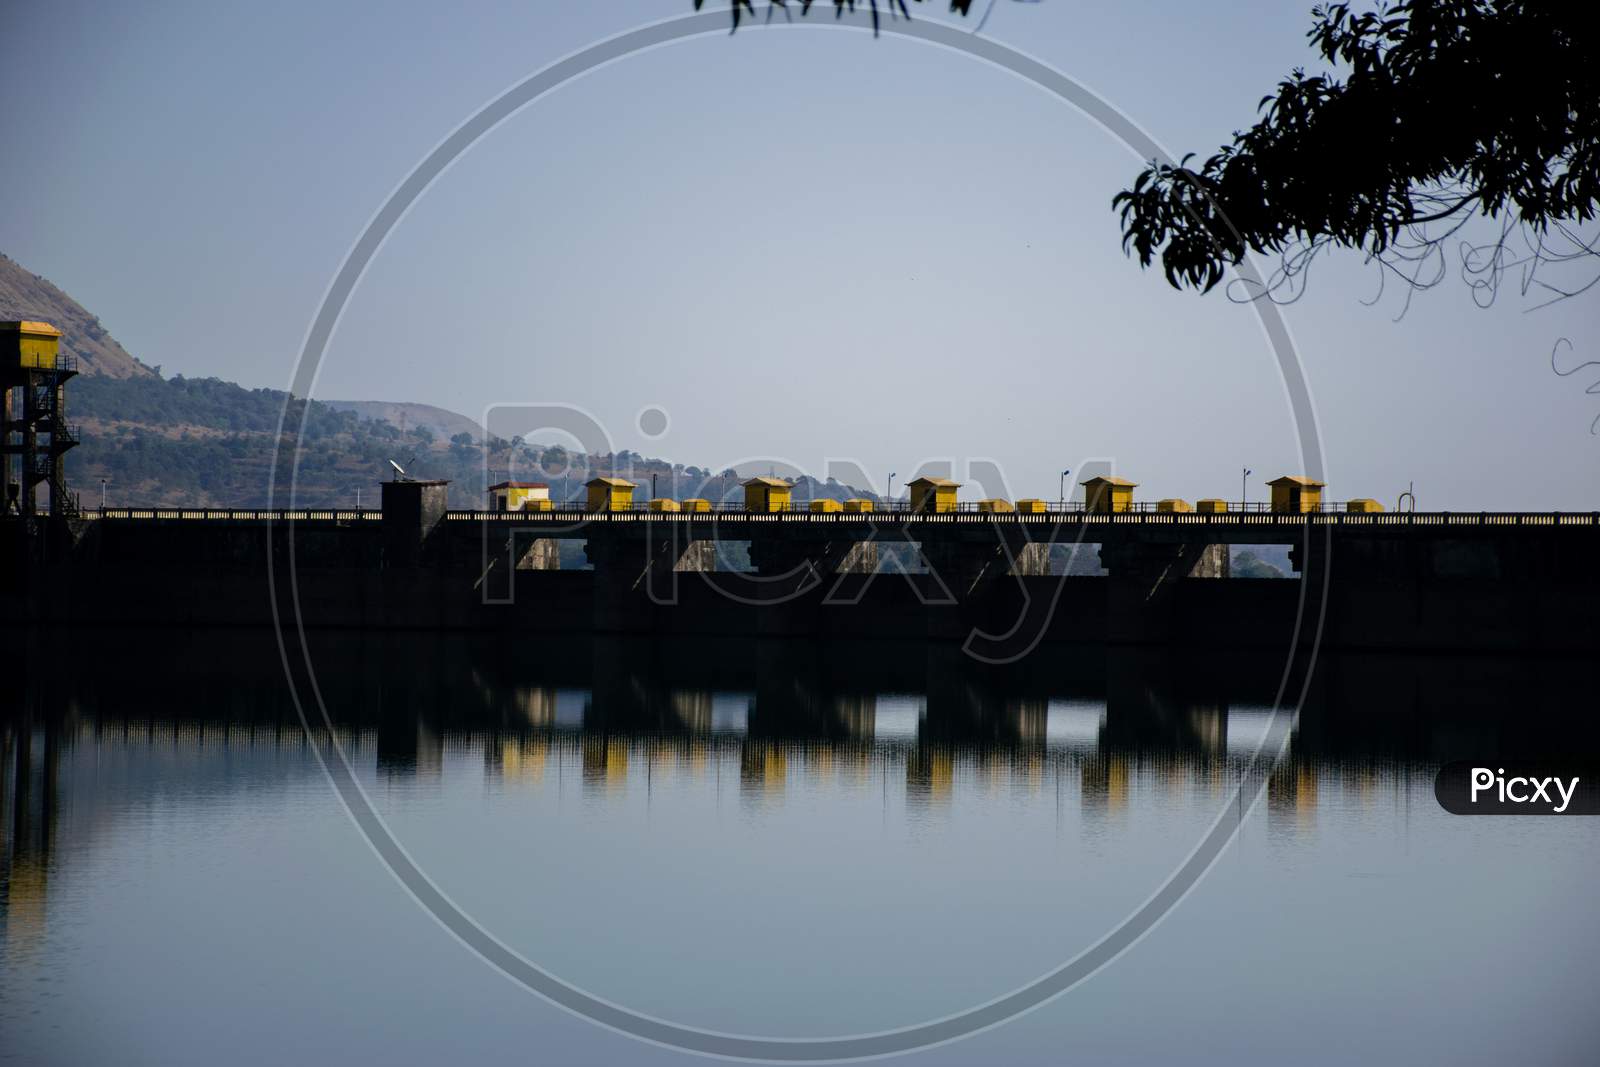 Panoramic View Of Photograph Of The Wall Of Panshet Dam In Pune, Maharashtra, India